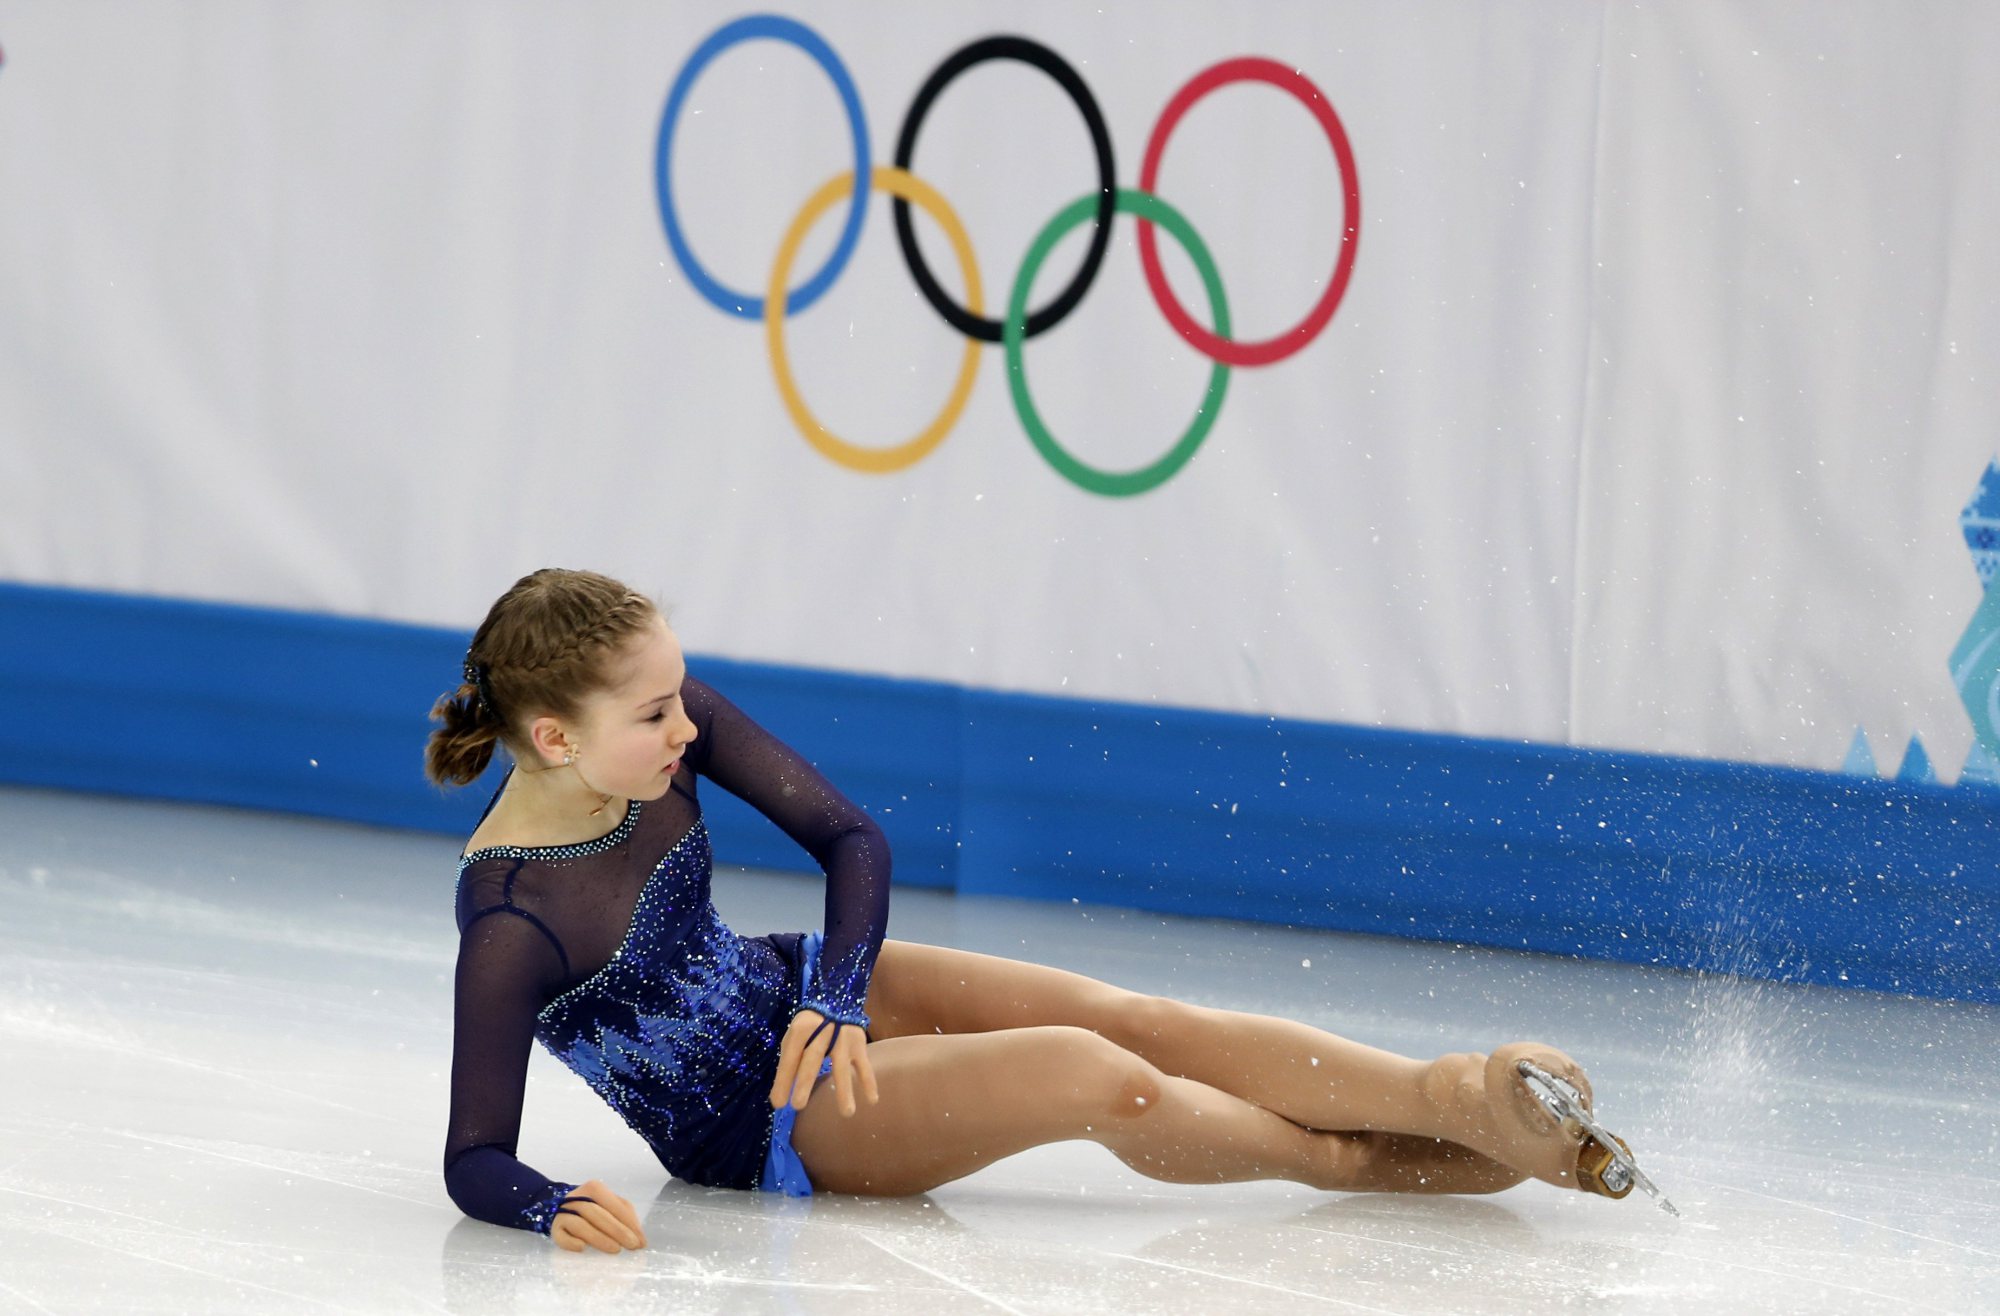 Russia's Yulia Lipnitskaya loses her balance during the ladies short program of Figure Skating at the 2014 Sochi Winter Olympic Games, on Feb. 19, 2014.